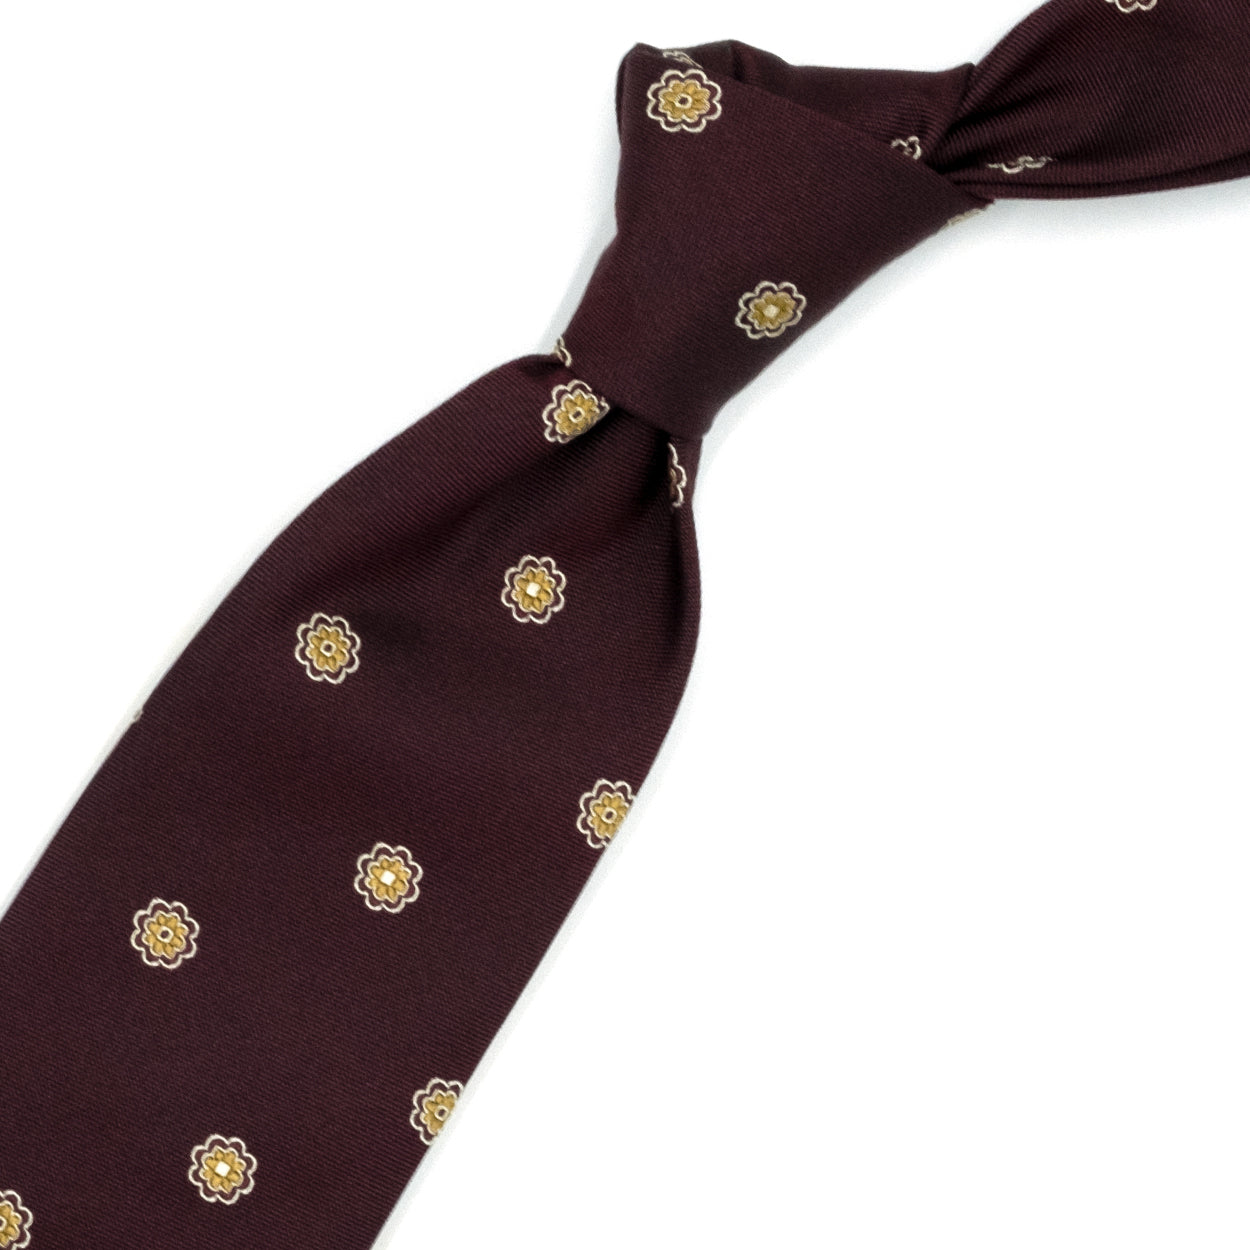 Bordeaux tie with mustard flowers